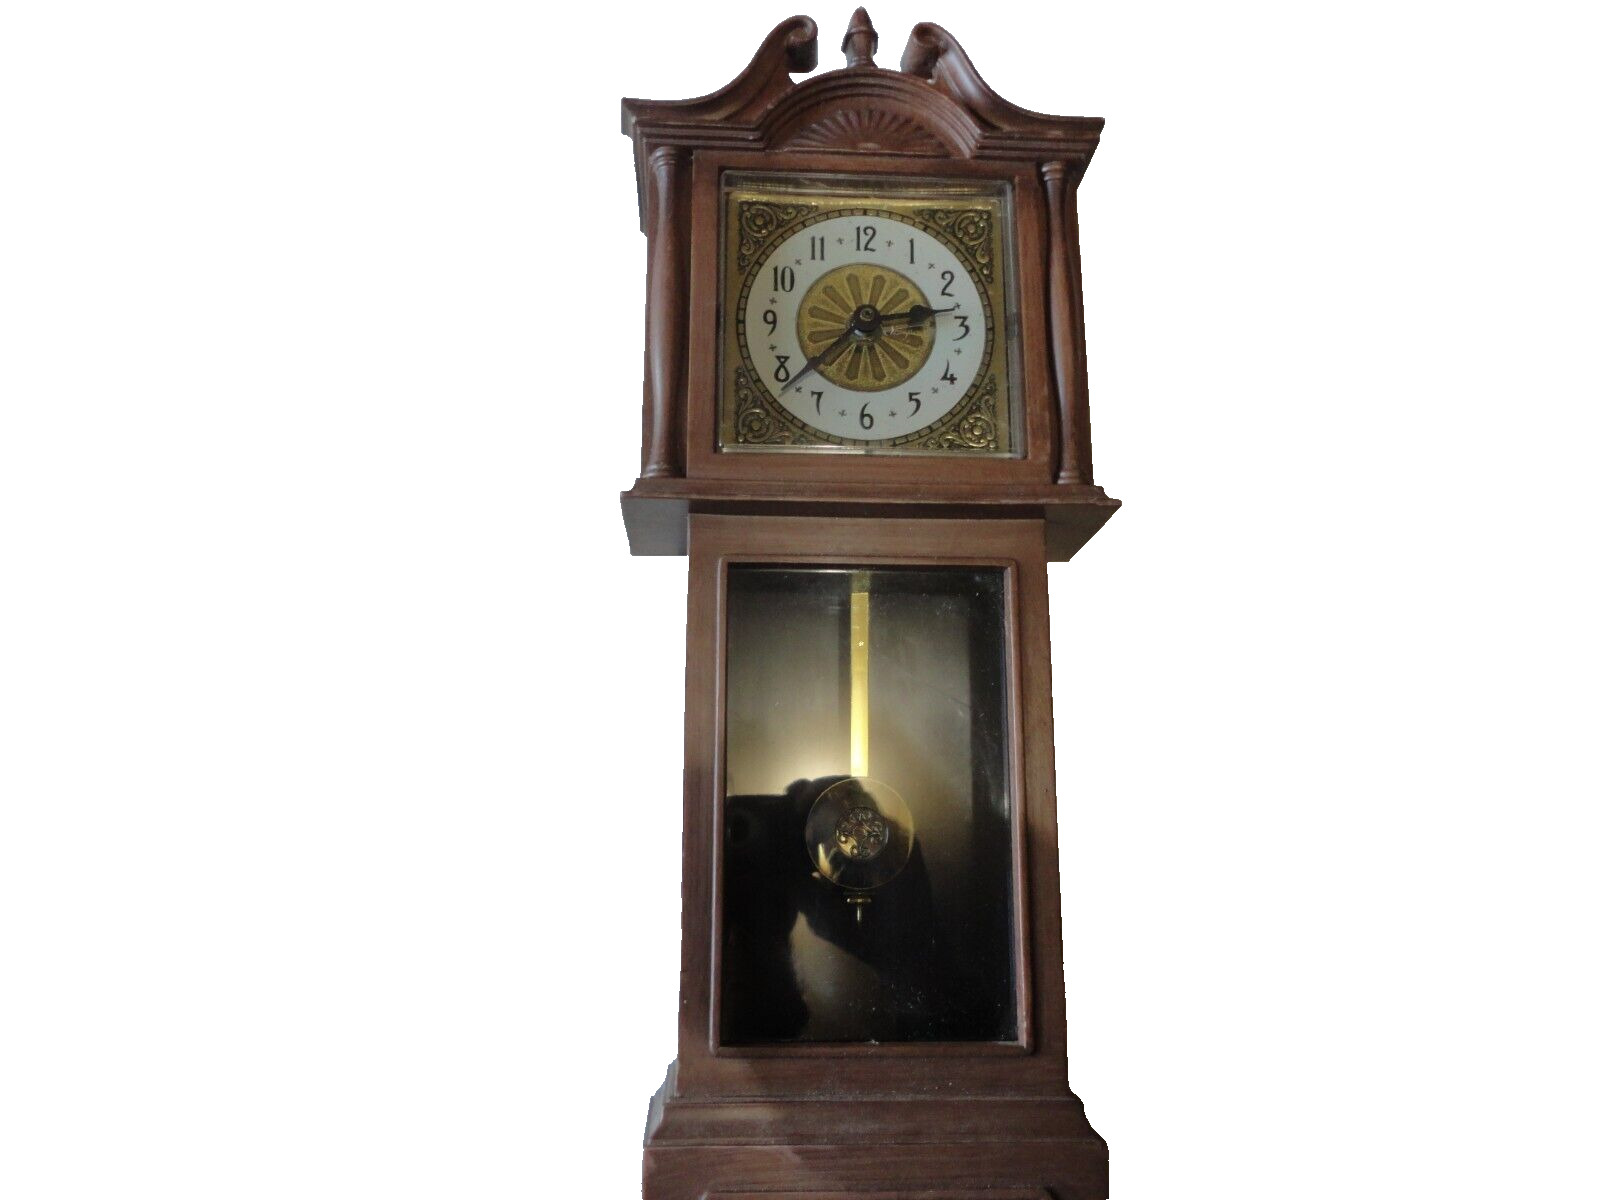 Vintage Miniture Grandfather Clock plastic case 18 inch tall RUNS